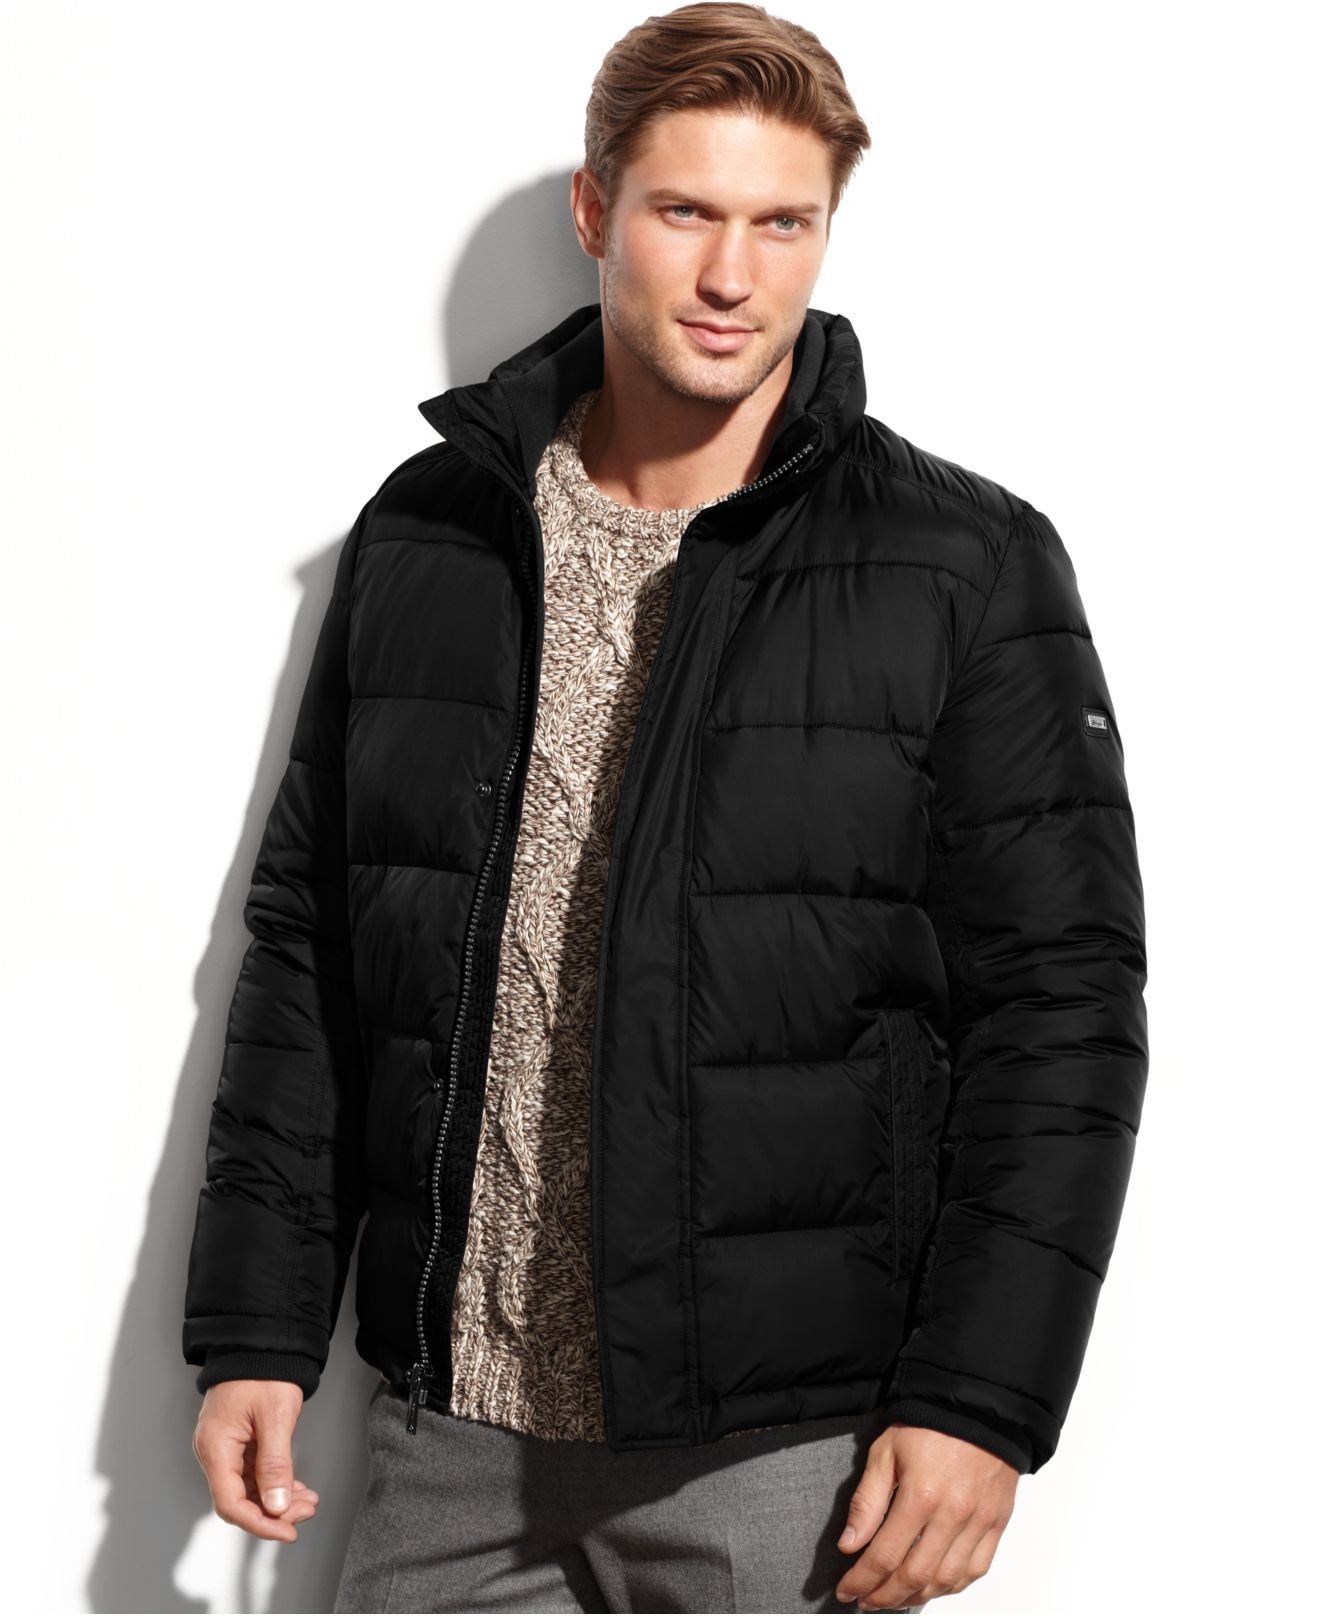 Lyst - Calvin klein Solid Performance Puffer Jacket in Black for Men